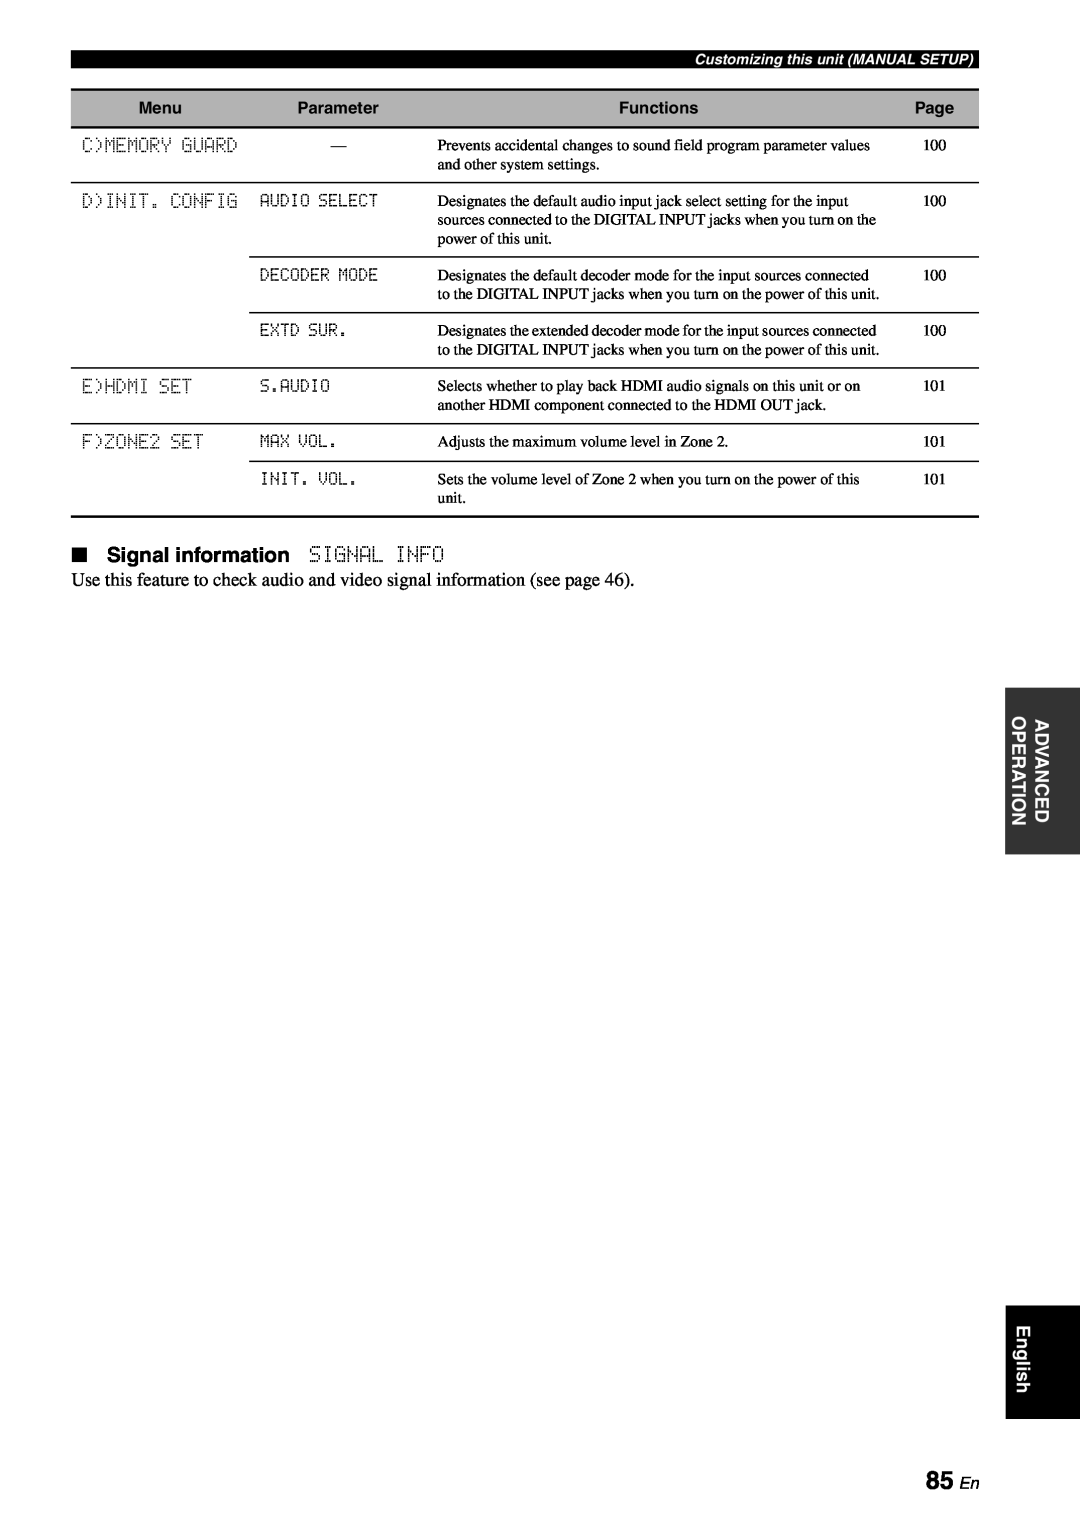 Yamaha RX-V863 owner manual 85 En, Signal information SIGNAL INFO 